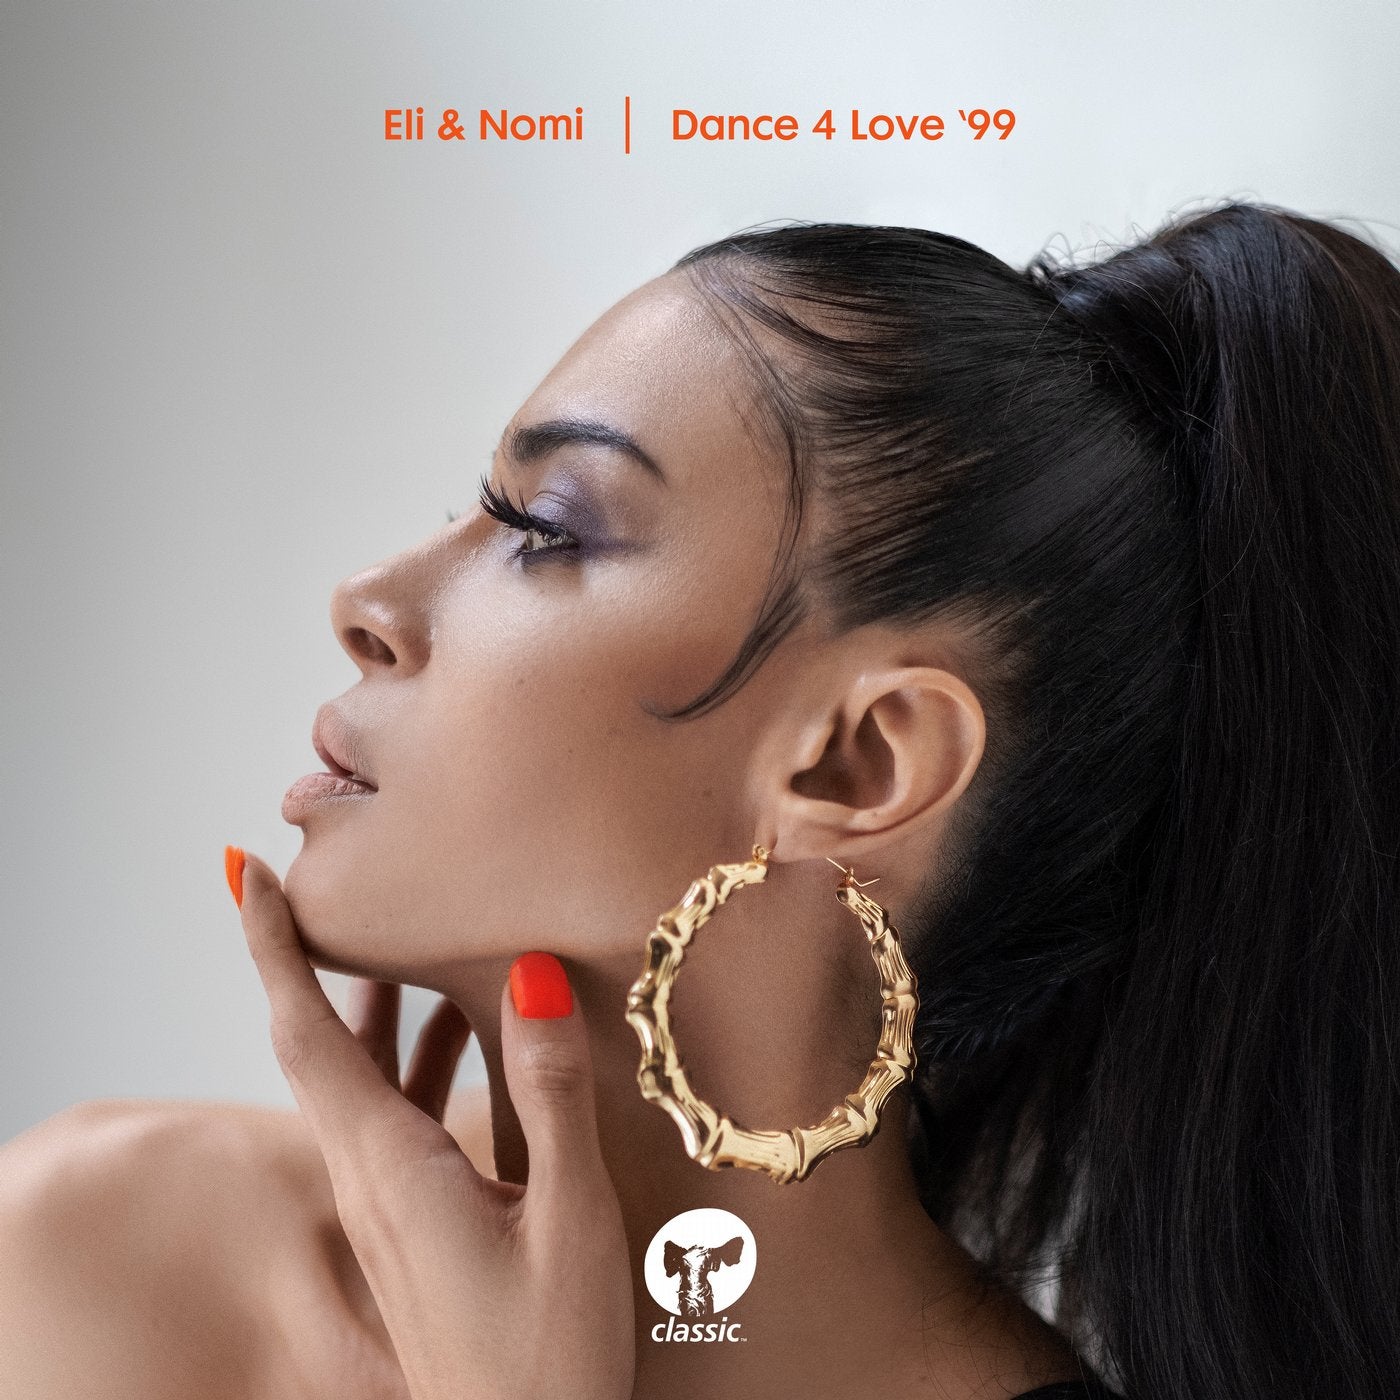 Dance 4 Love '99 - Club Mix